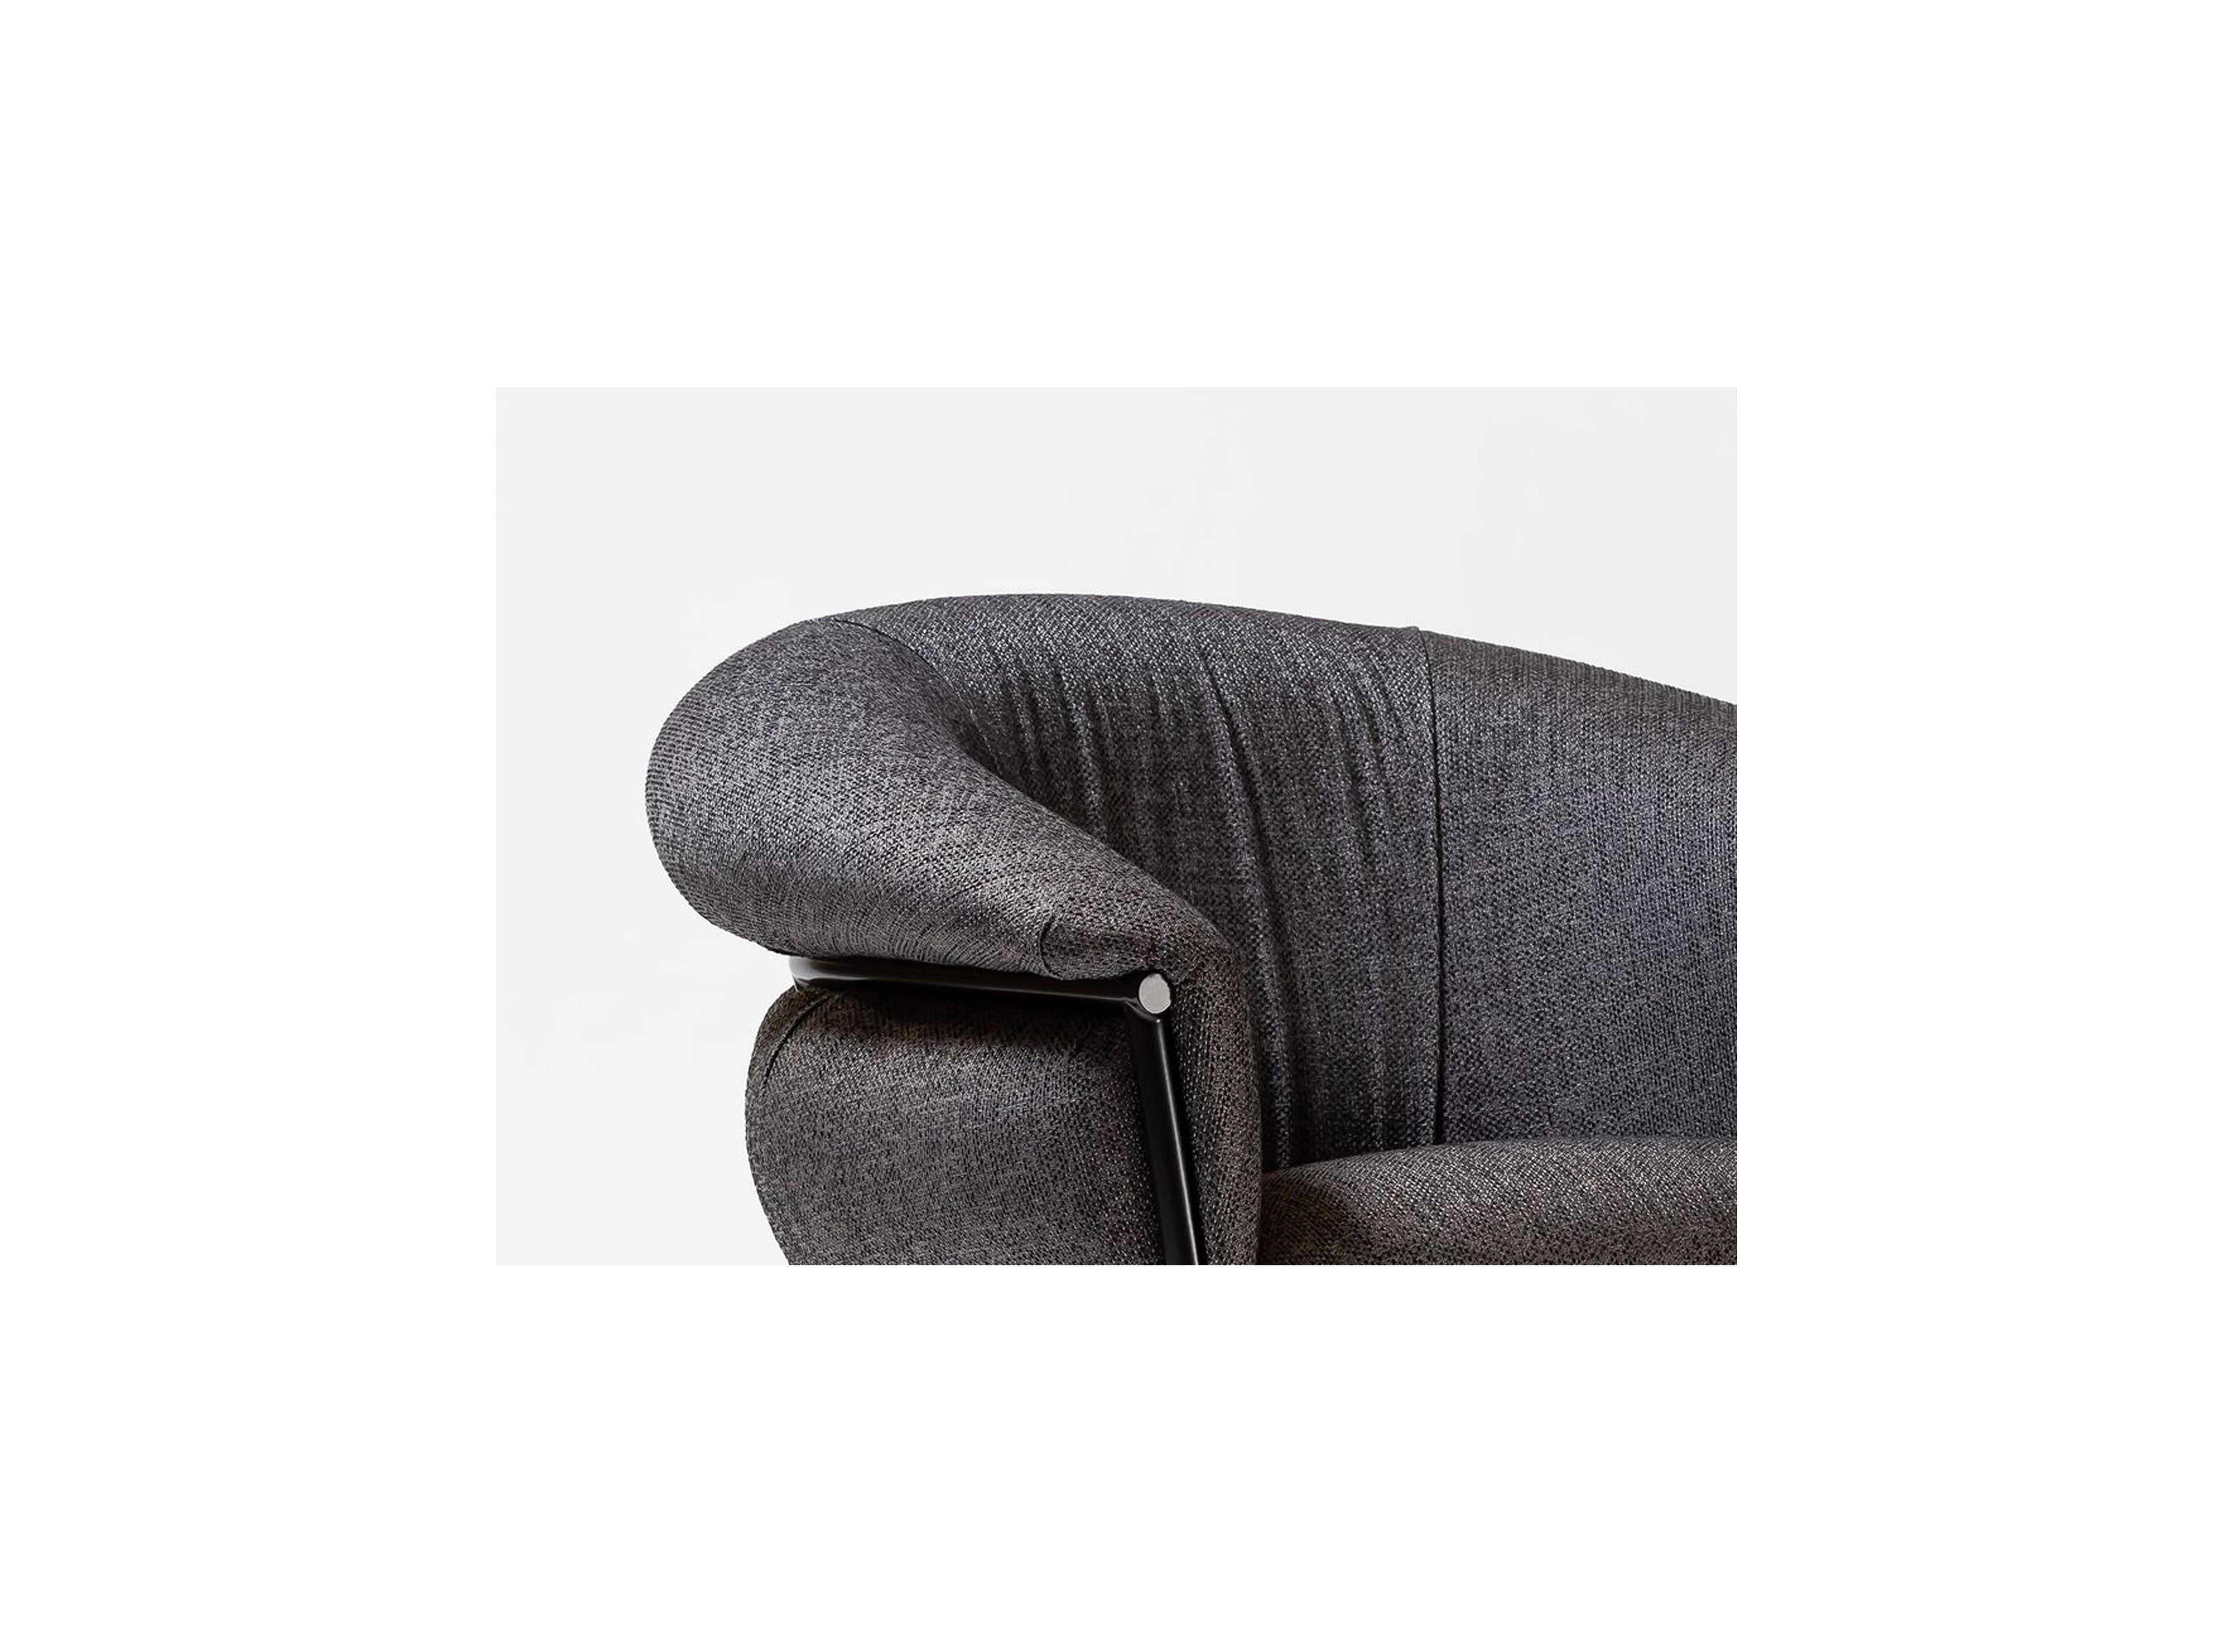 Moderne Stephen Burks fauteuil Grasso contemporain en tissu noir trou de serrure en vente